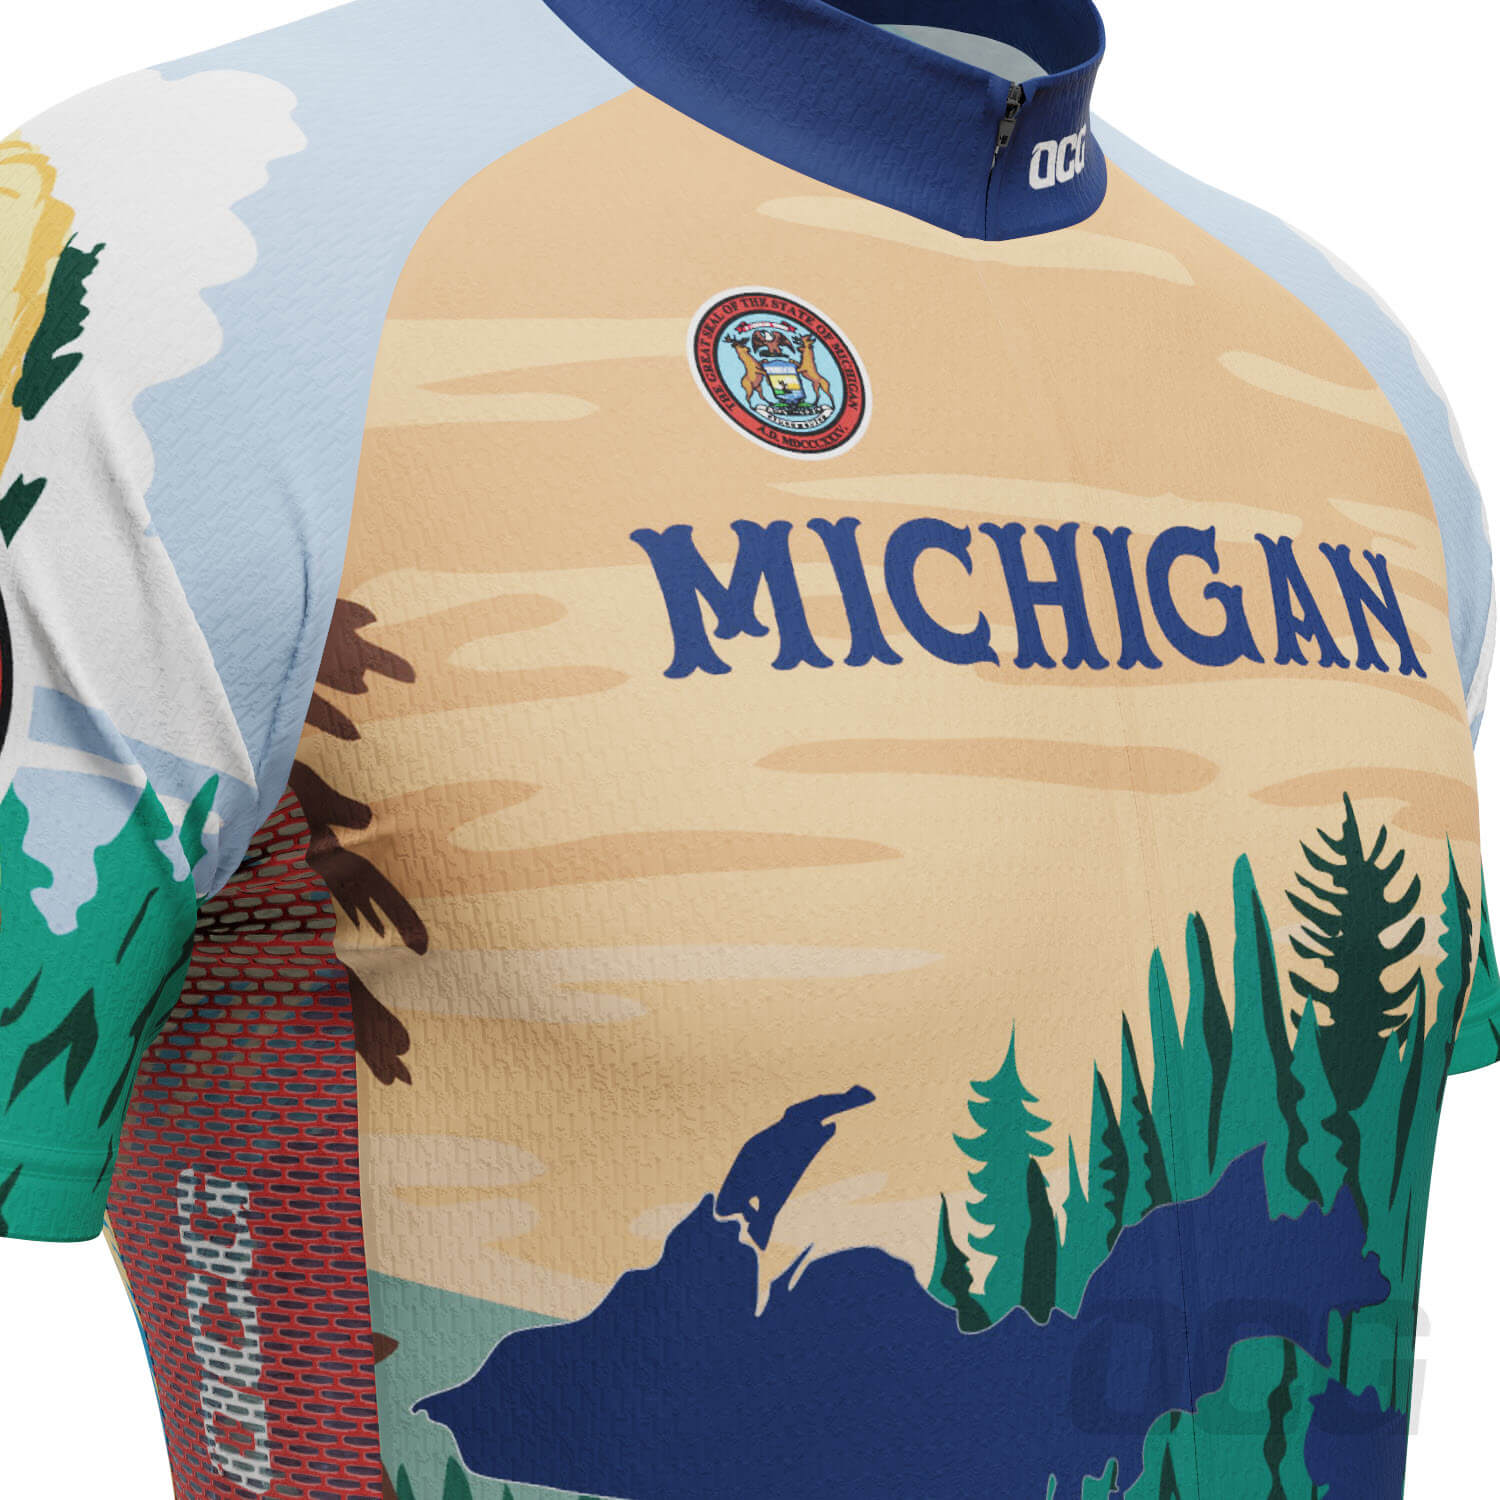 Men's Michigan US State Icon Series 1 2 Piece Cycling Kit